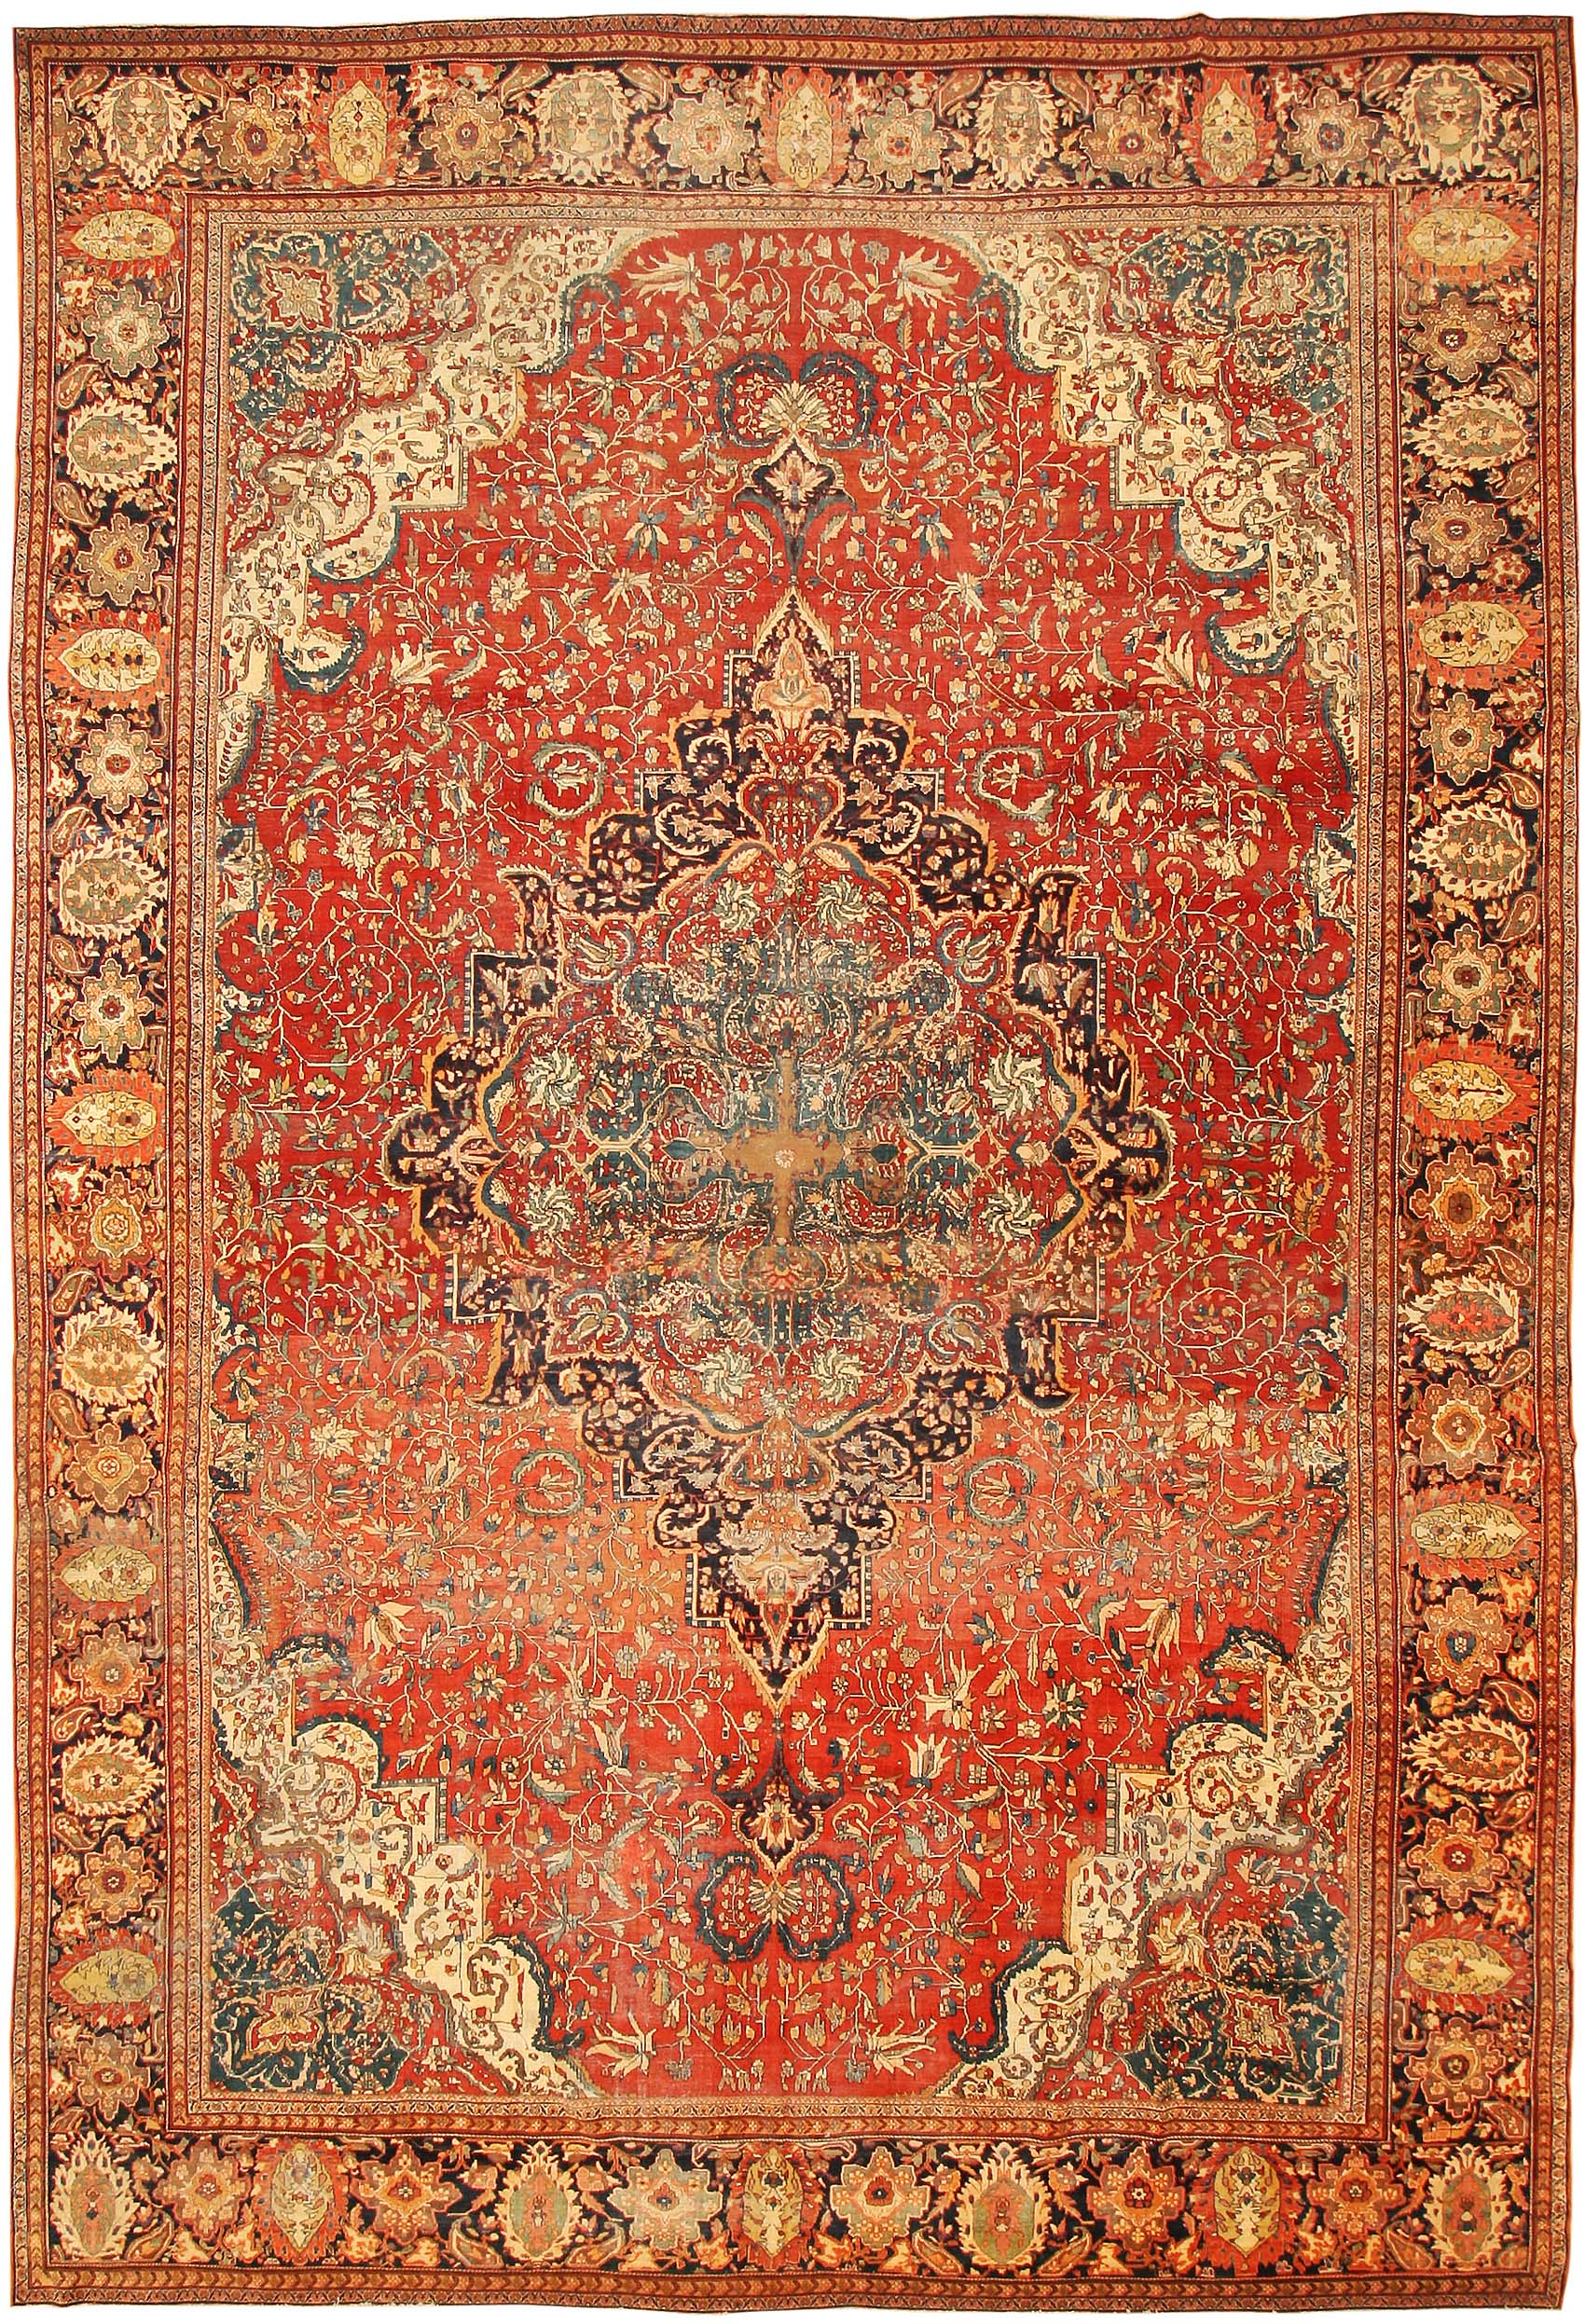 Persian Carpet photo - 3